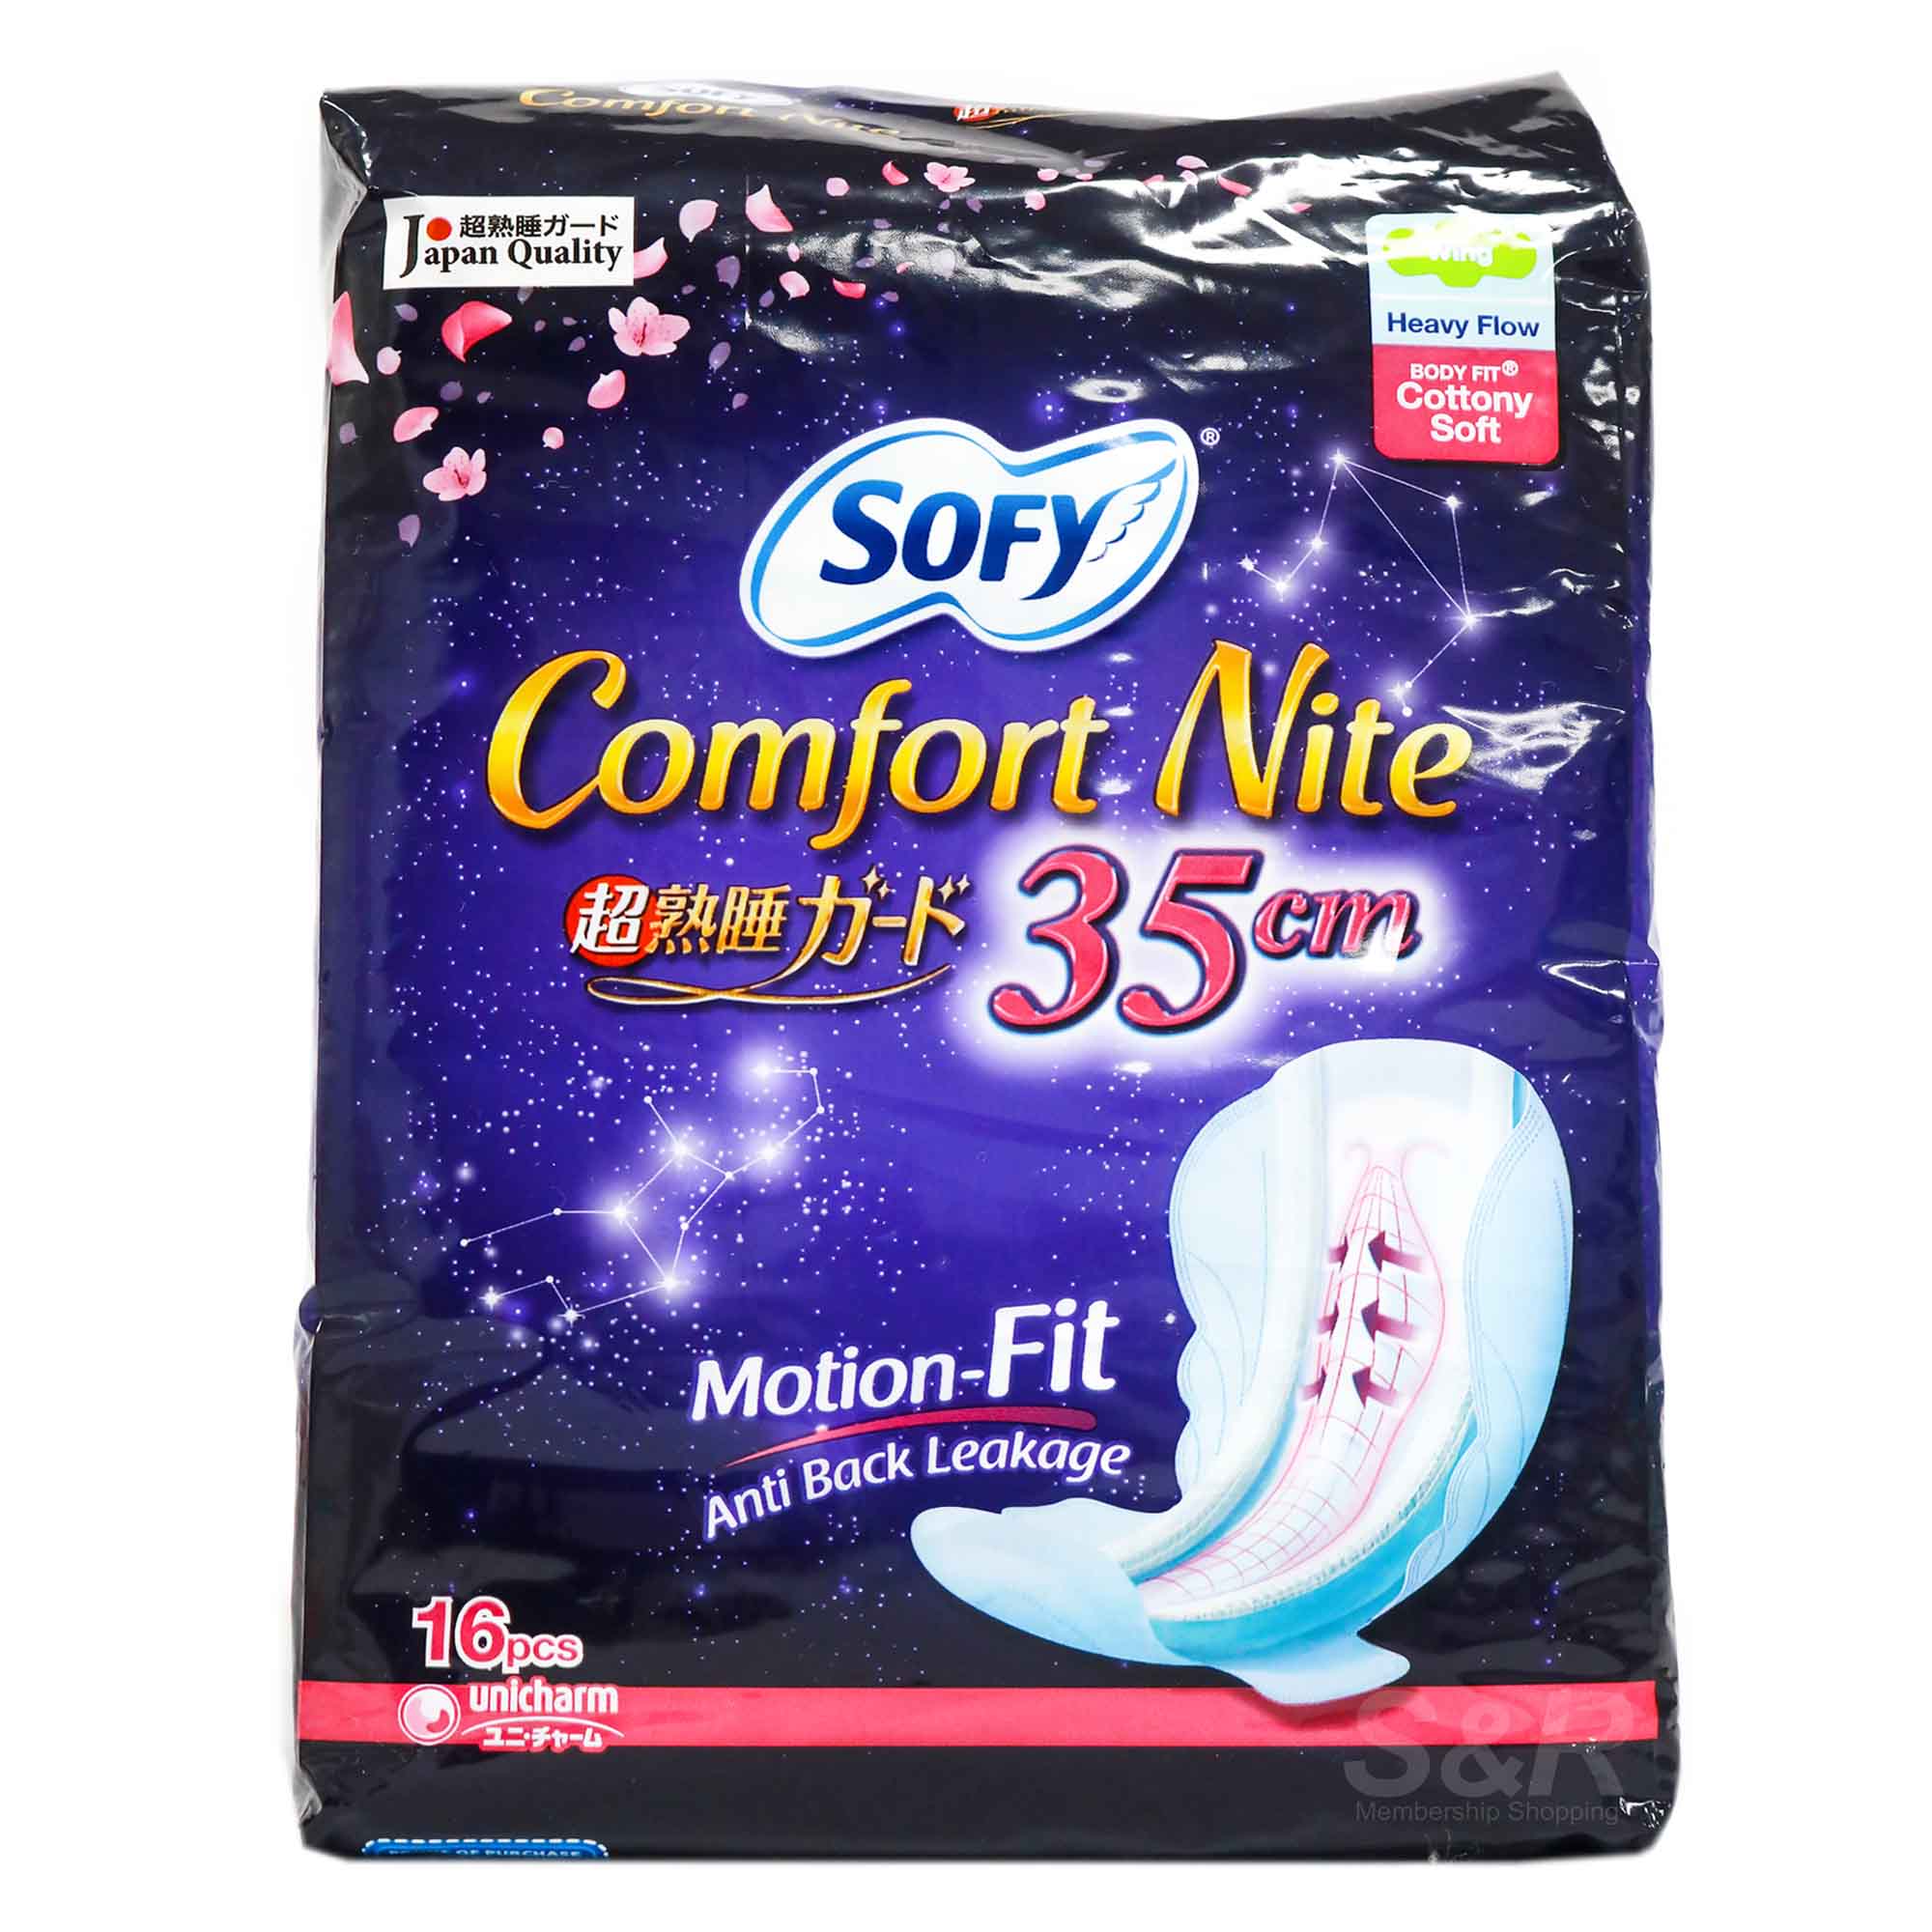 Sofy Comfort Nite Wing Pad Sanitary Napkin 35cm 16pcs